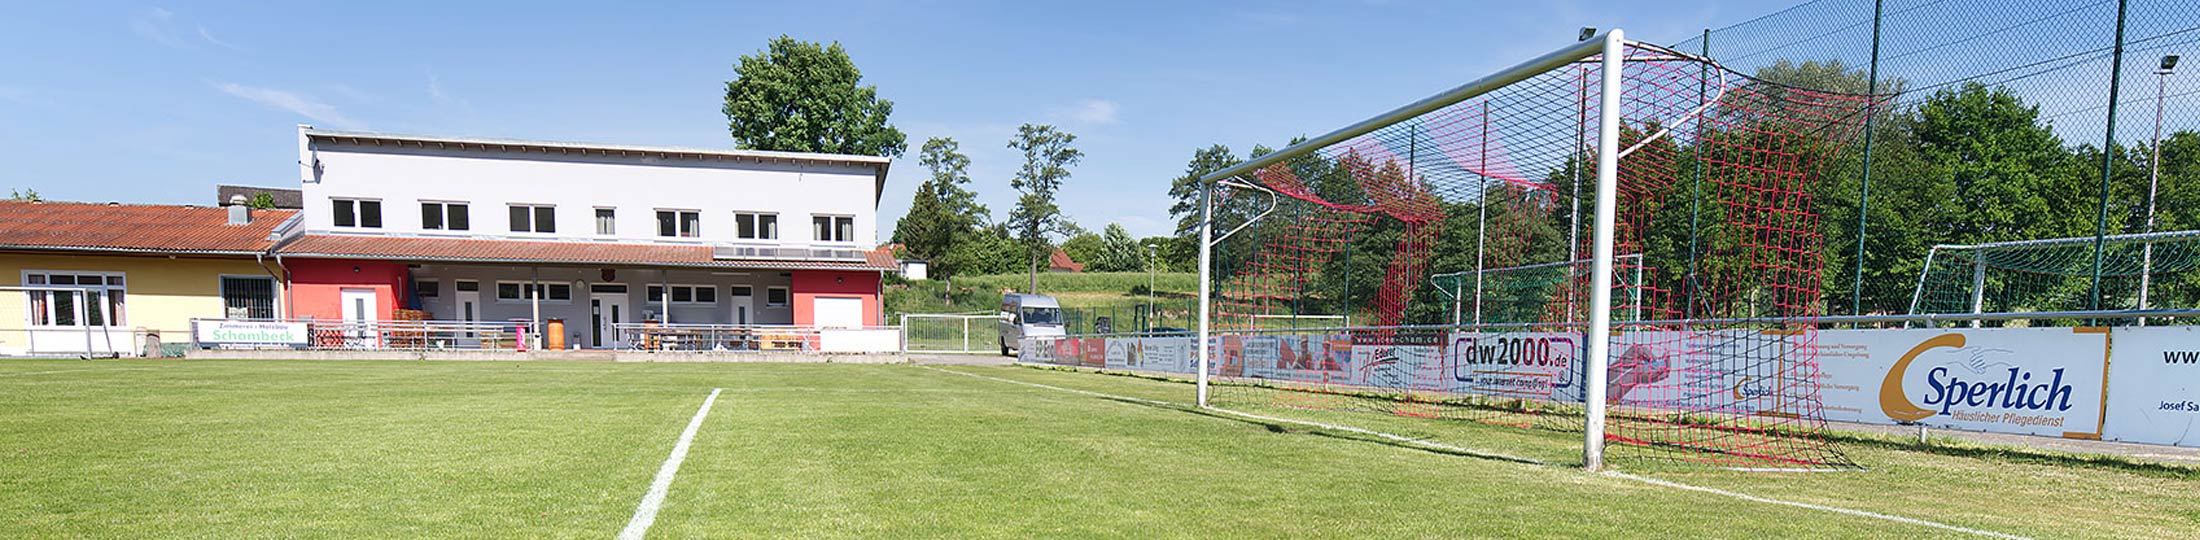 Sliderbild-Sportplatz